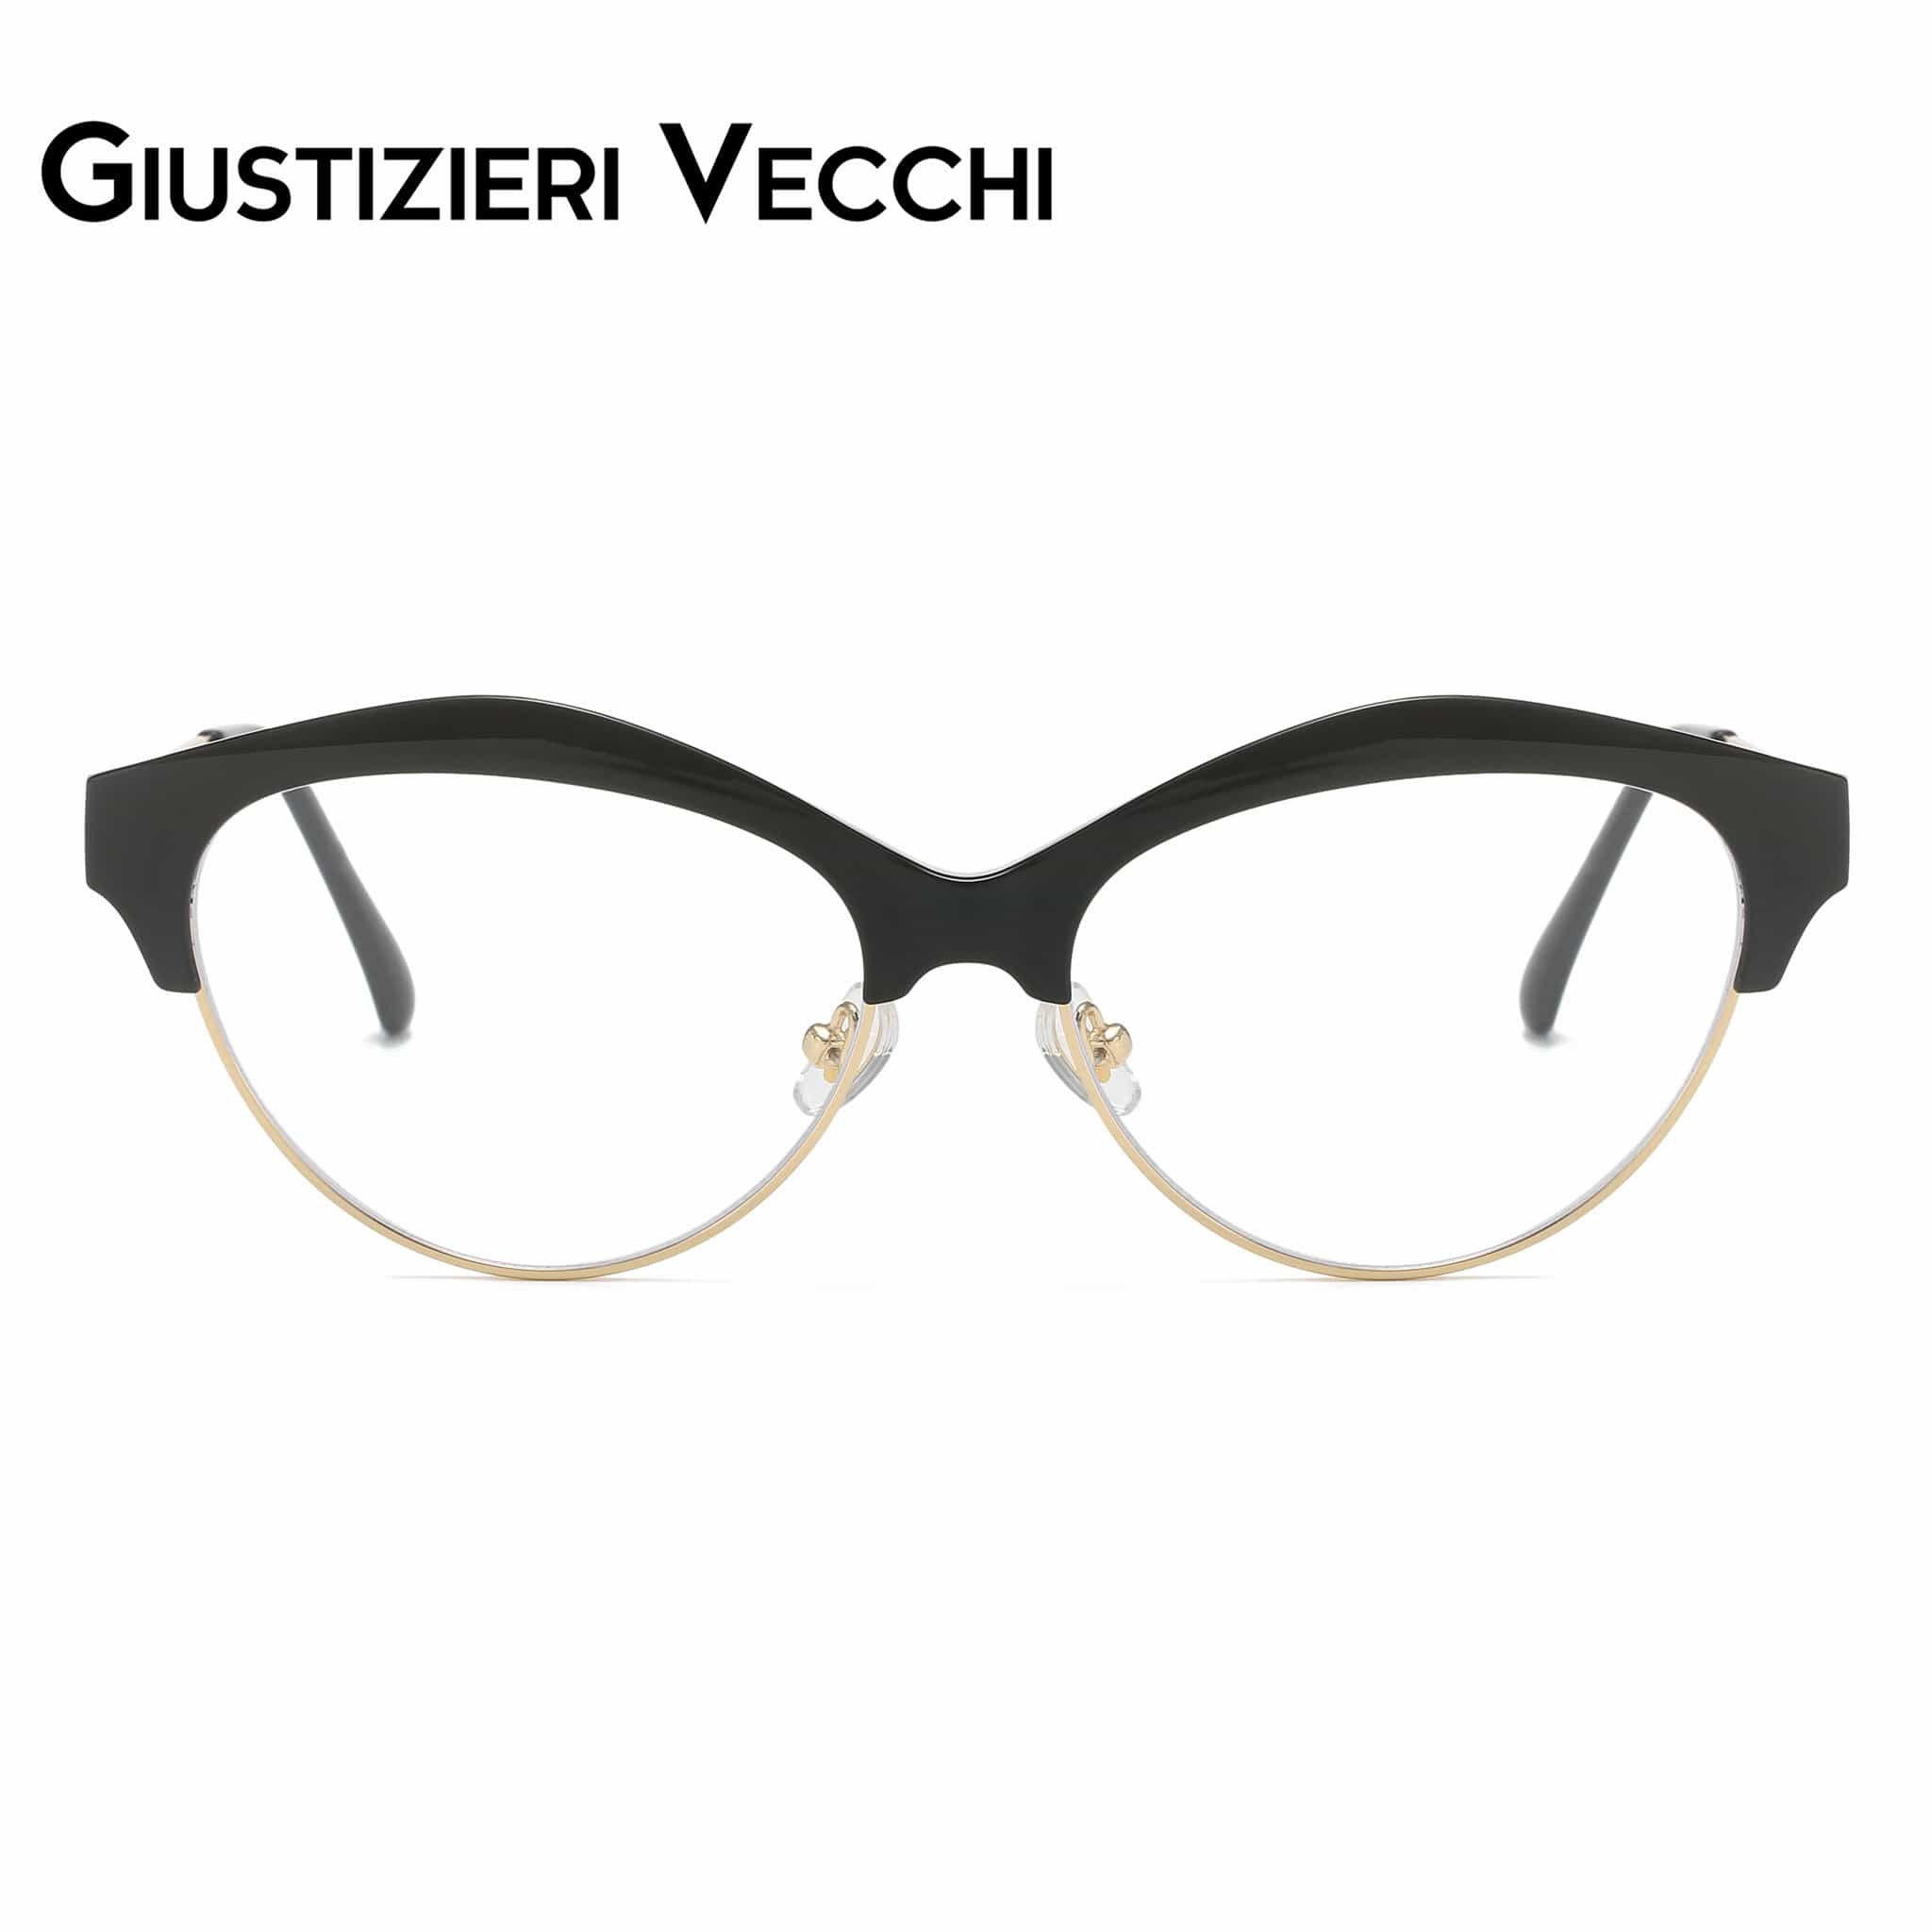 GIUSTIZIERI VECCHI Eyeglasses Large / Black with Gold MajesticAura